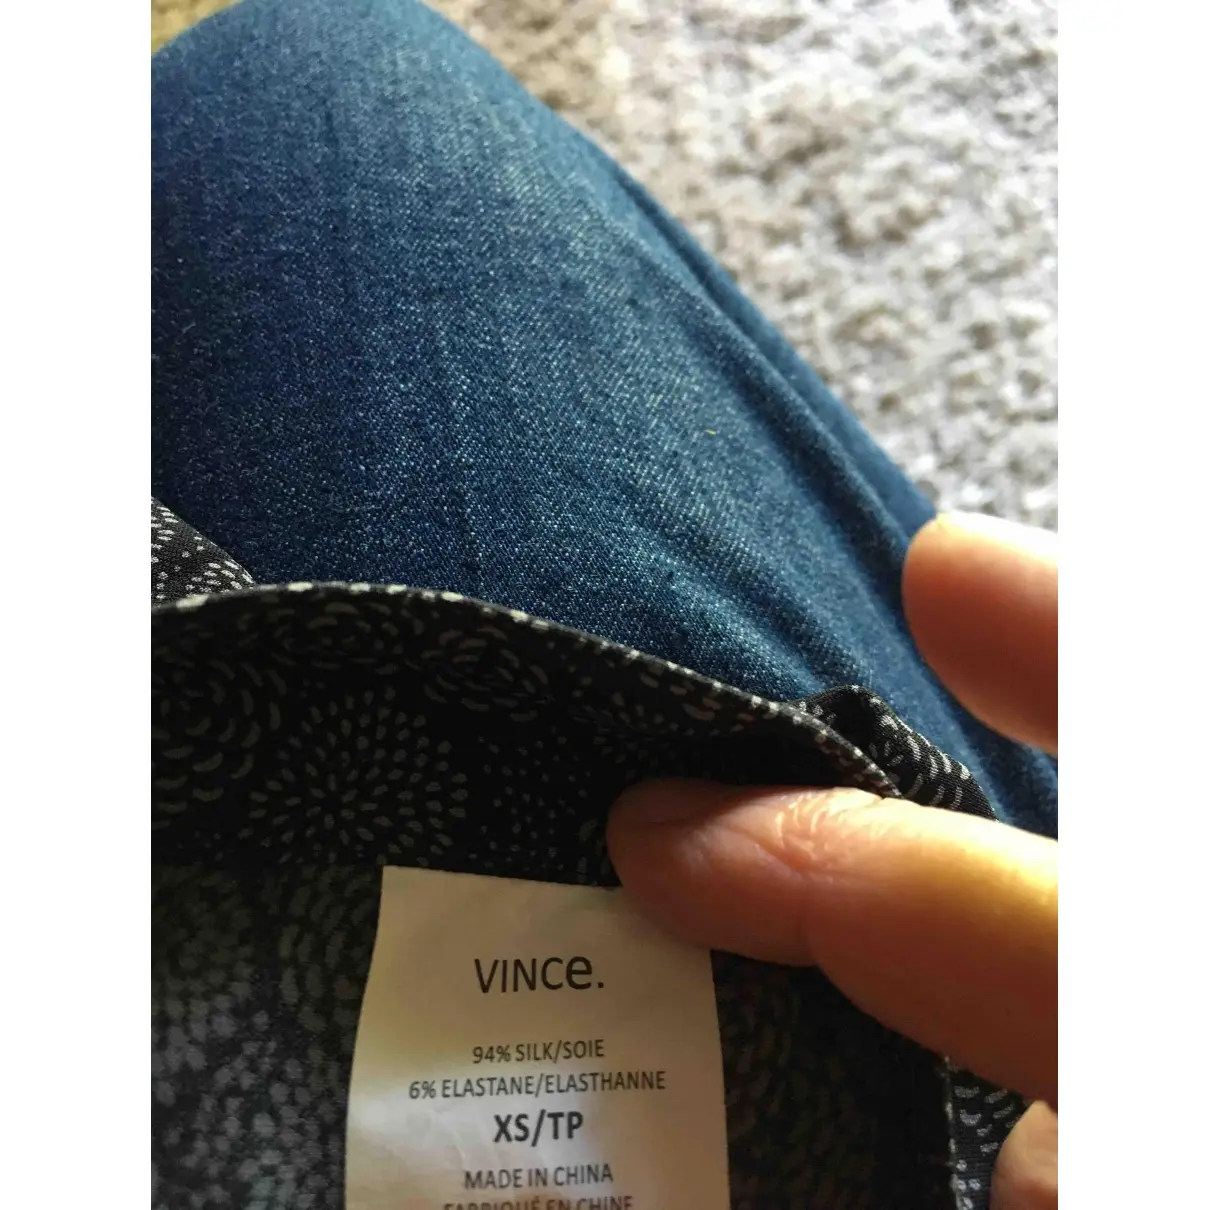 Buy Vince Silk straight pants online